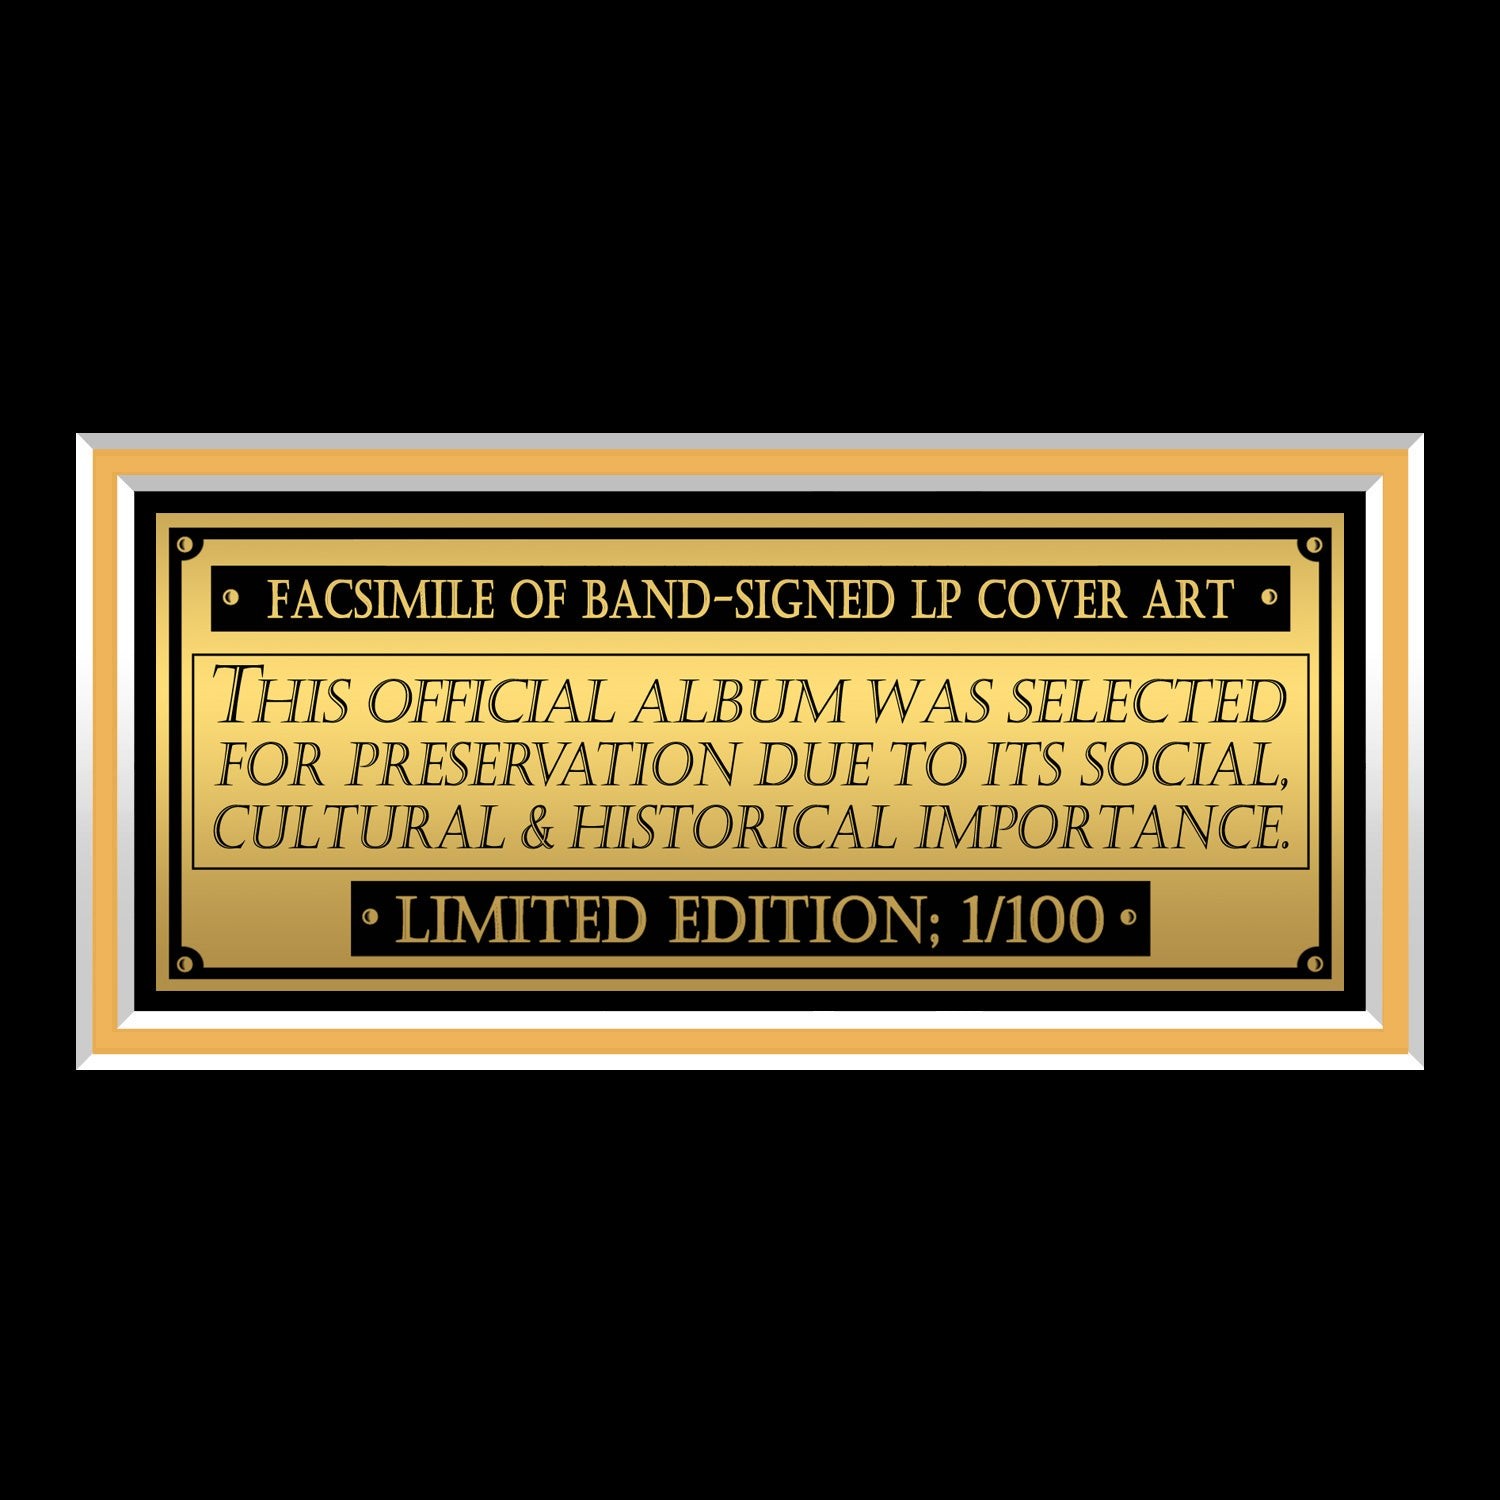 Tupac Shakur 2Pac - All Eyez On Me Gold LP Record Signature